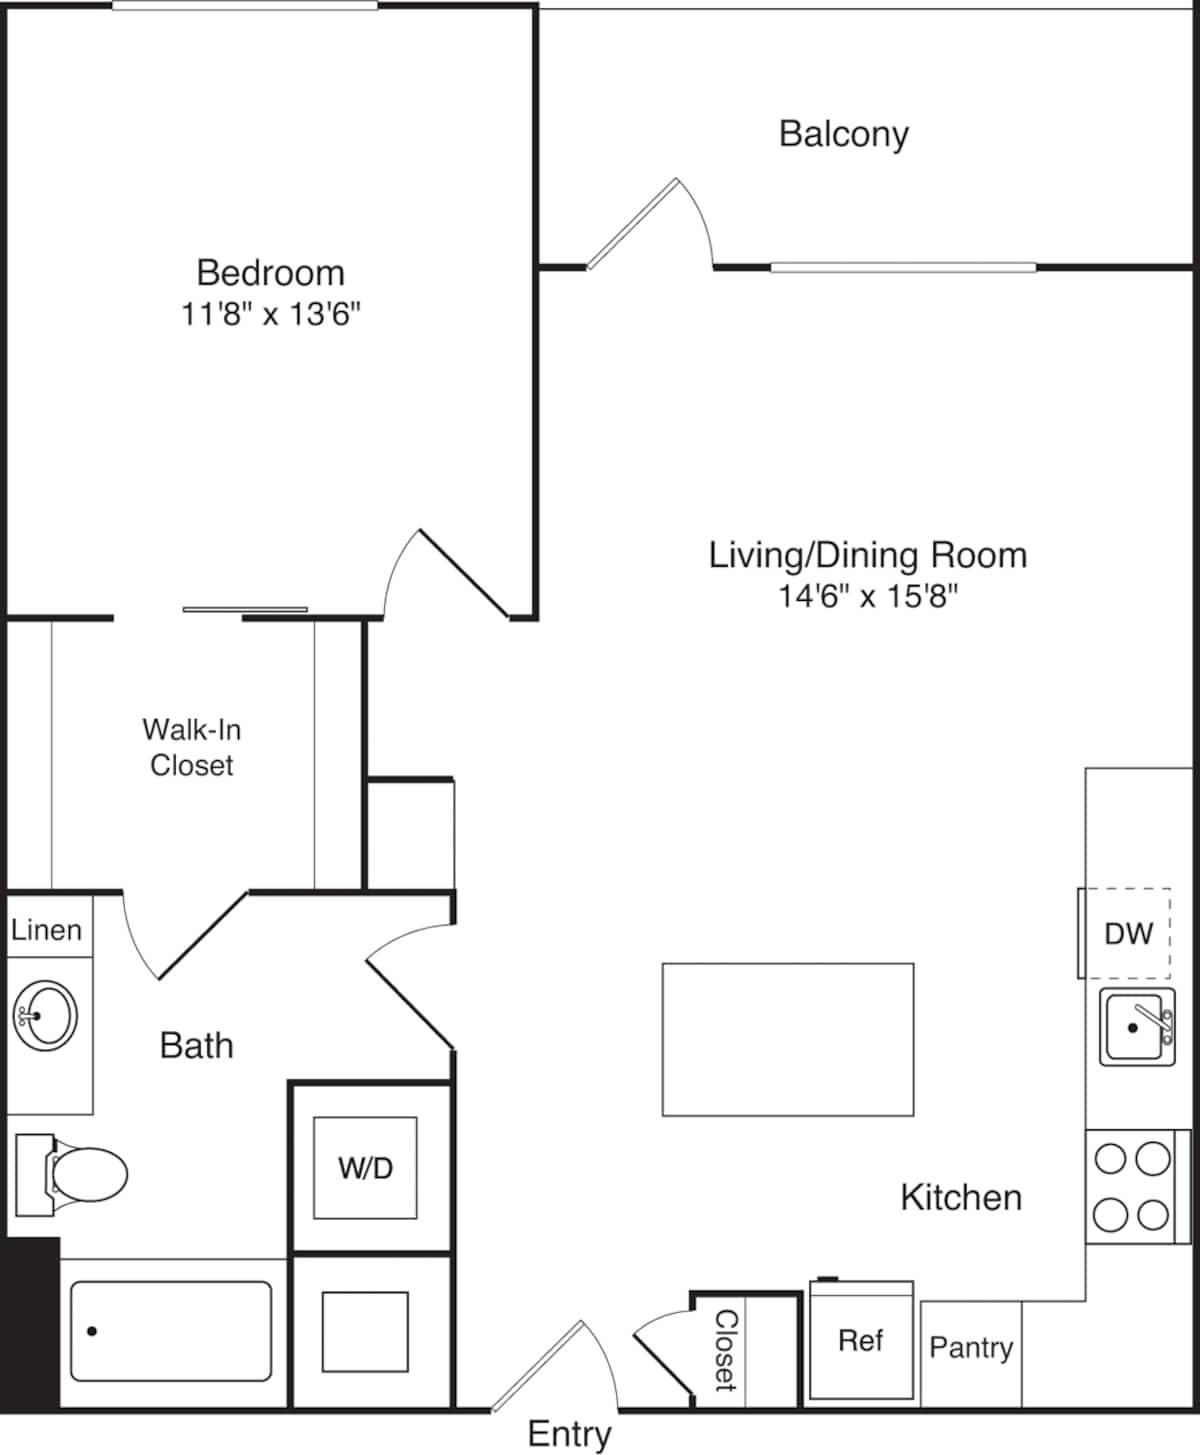 Floorplan diagram for A18, showing 1 bedroom